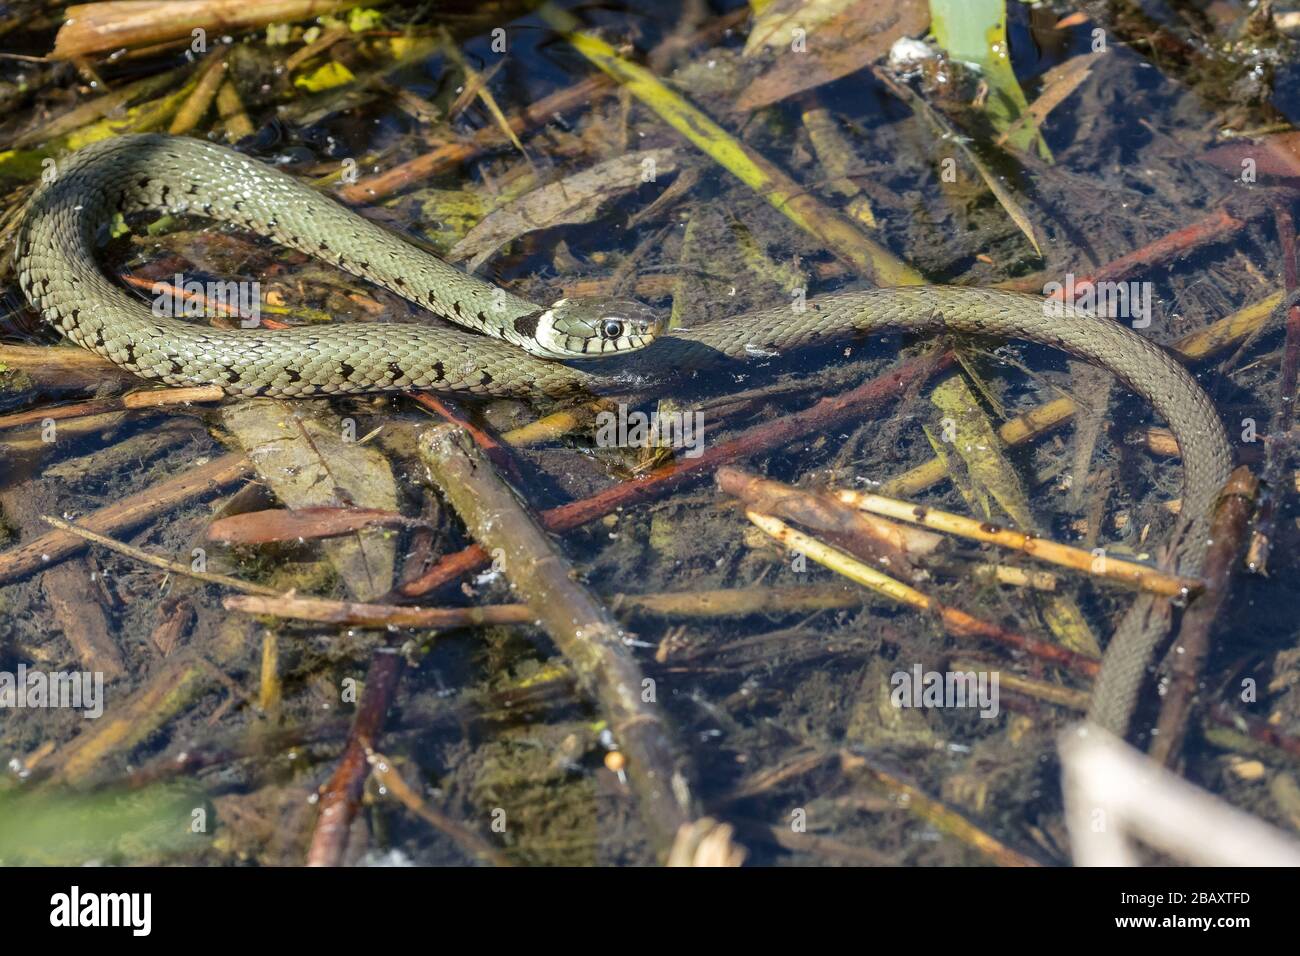 Grass snake (Natrix natrix) in its natural habitat on the shore of a lake Stock Photo